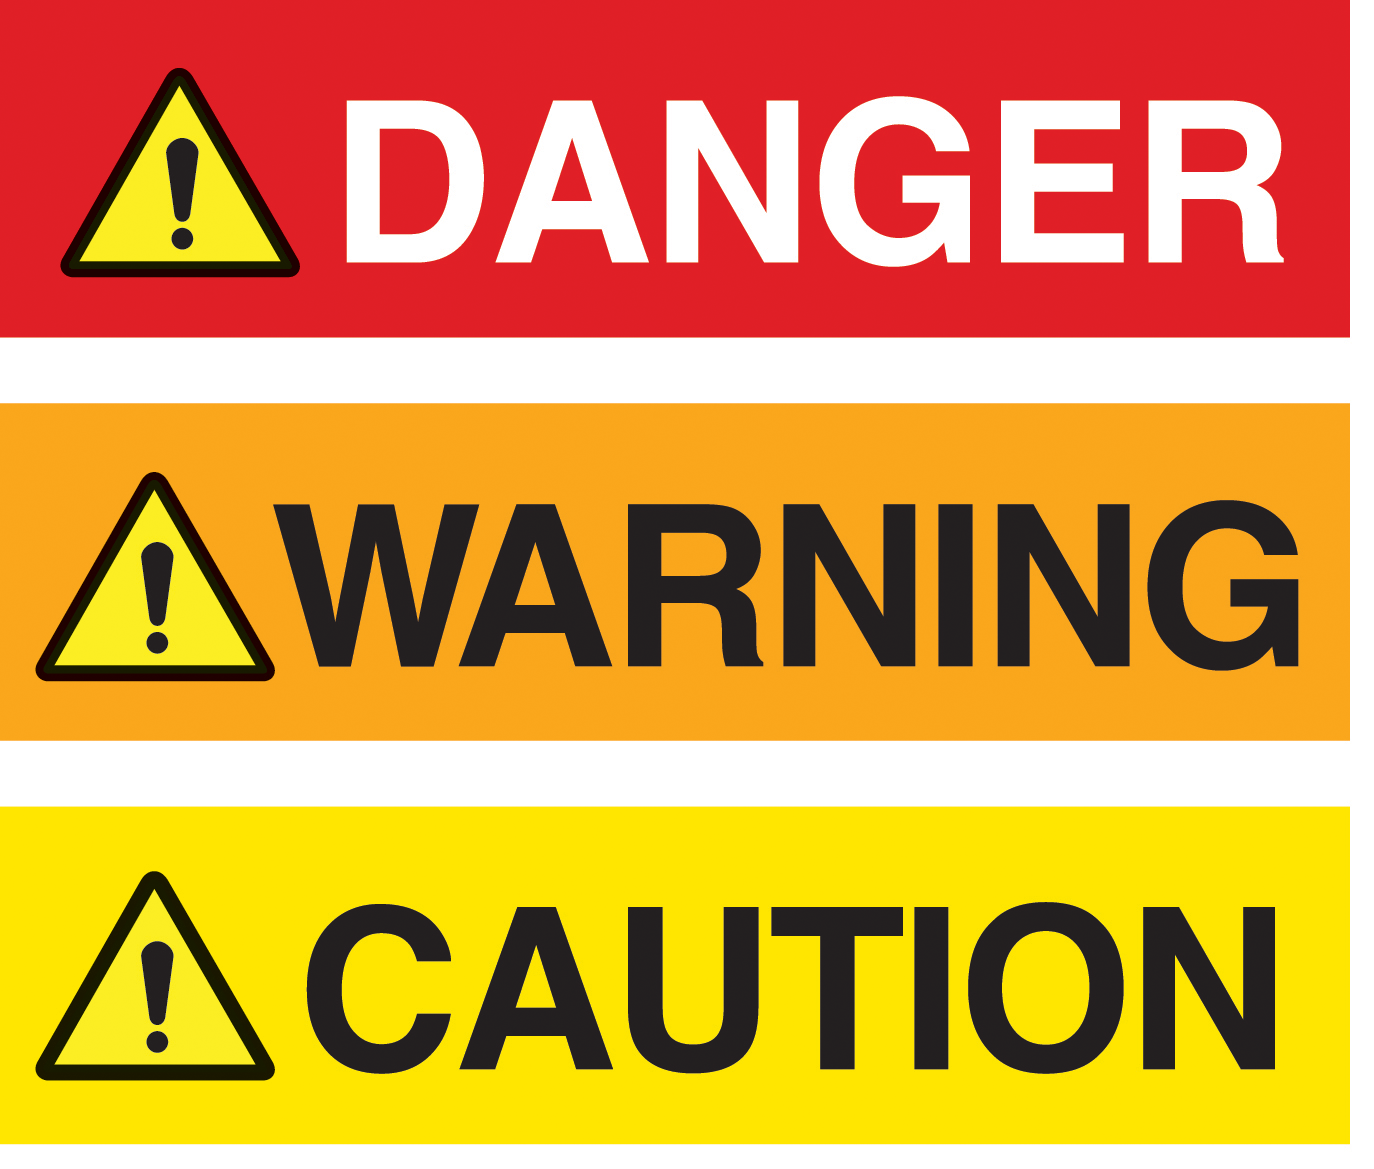 Safety Hazards In The Workshop Signs Clipart Best